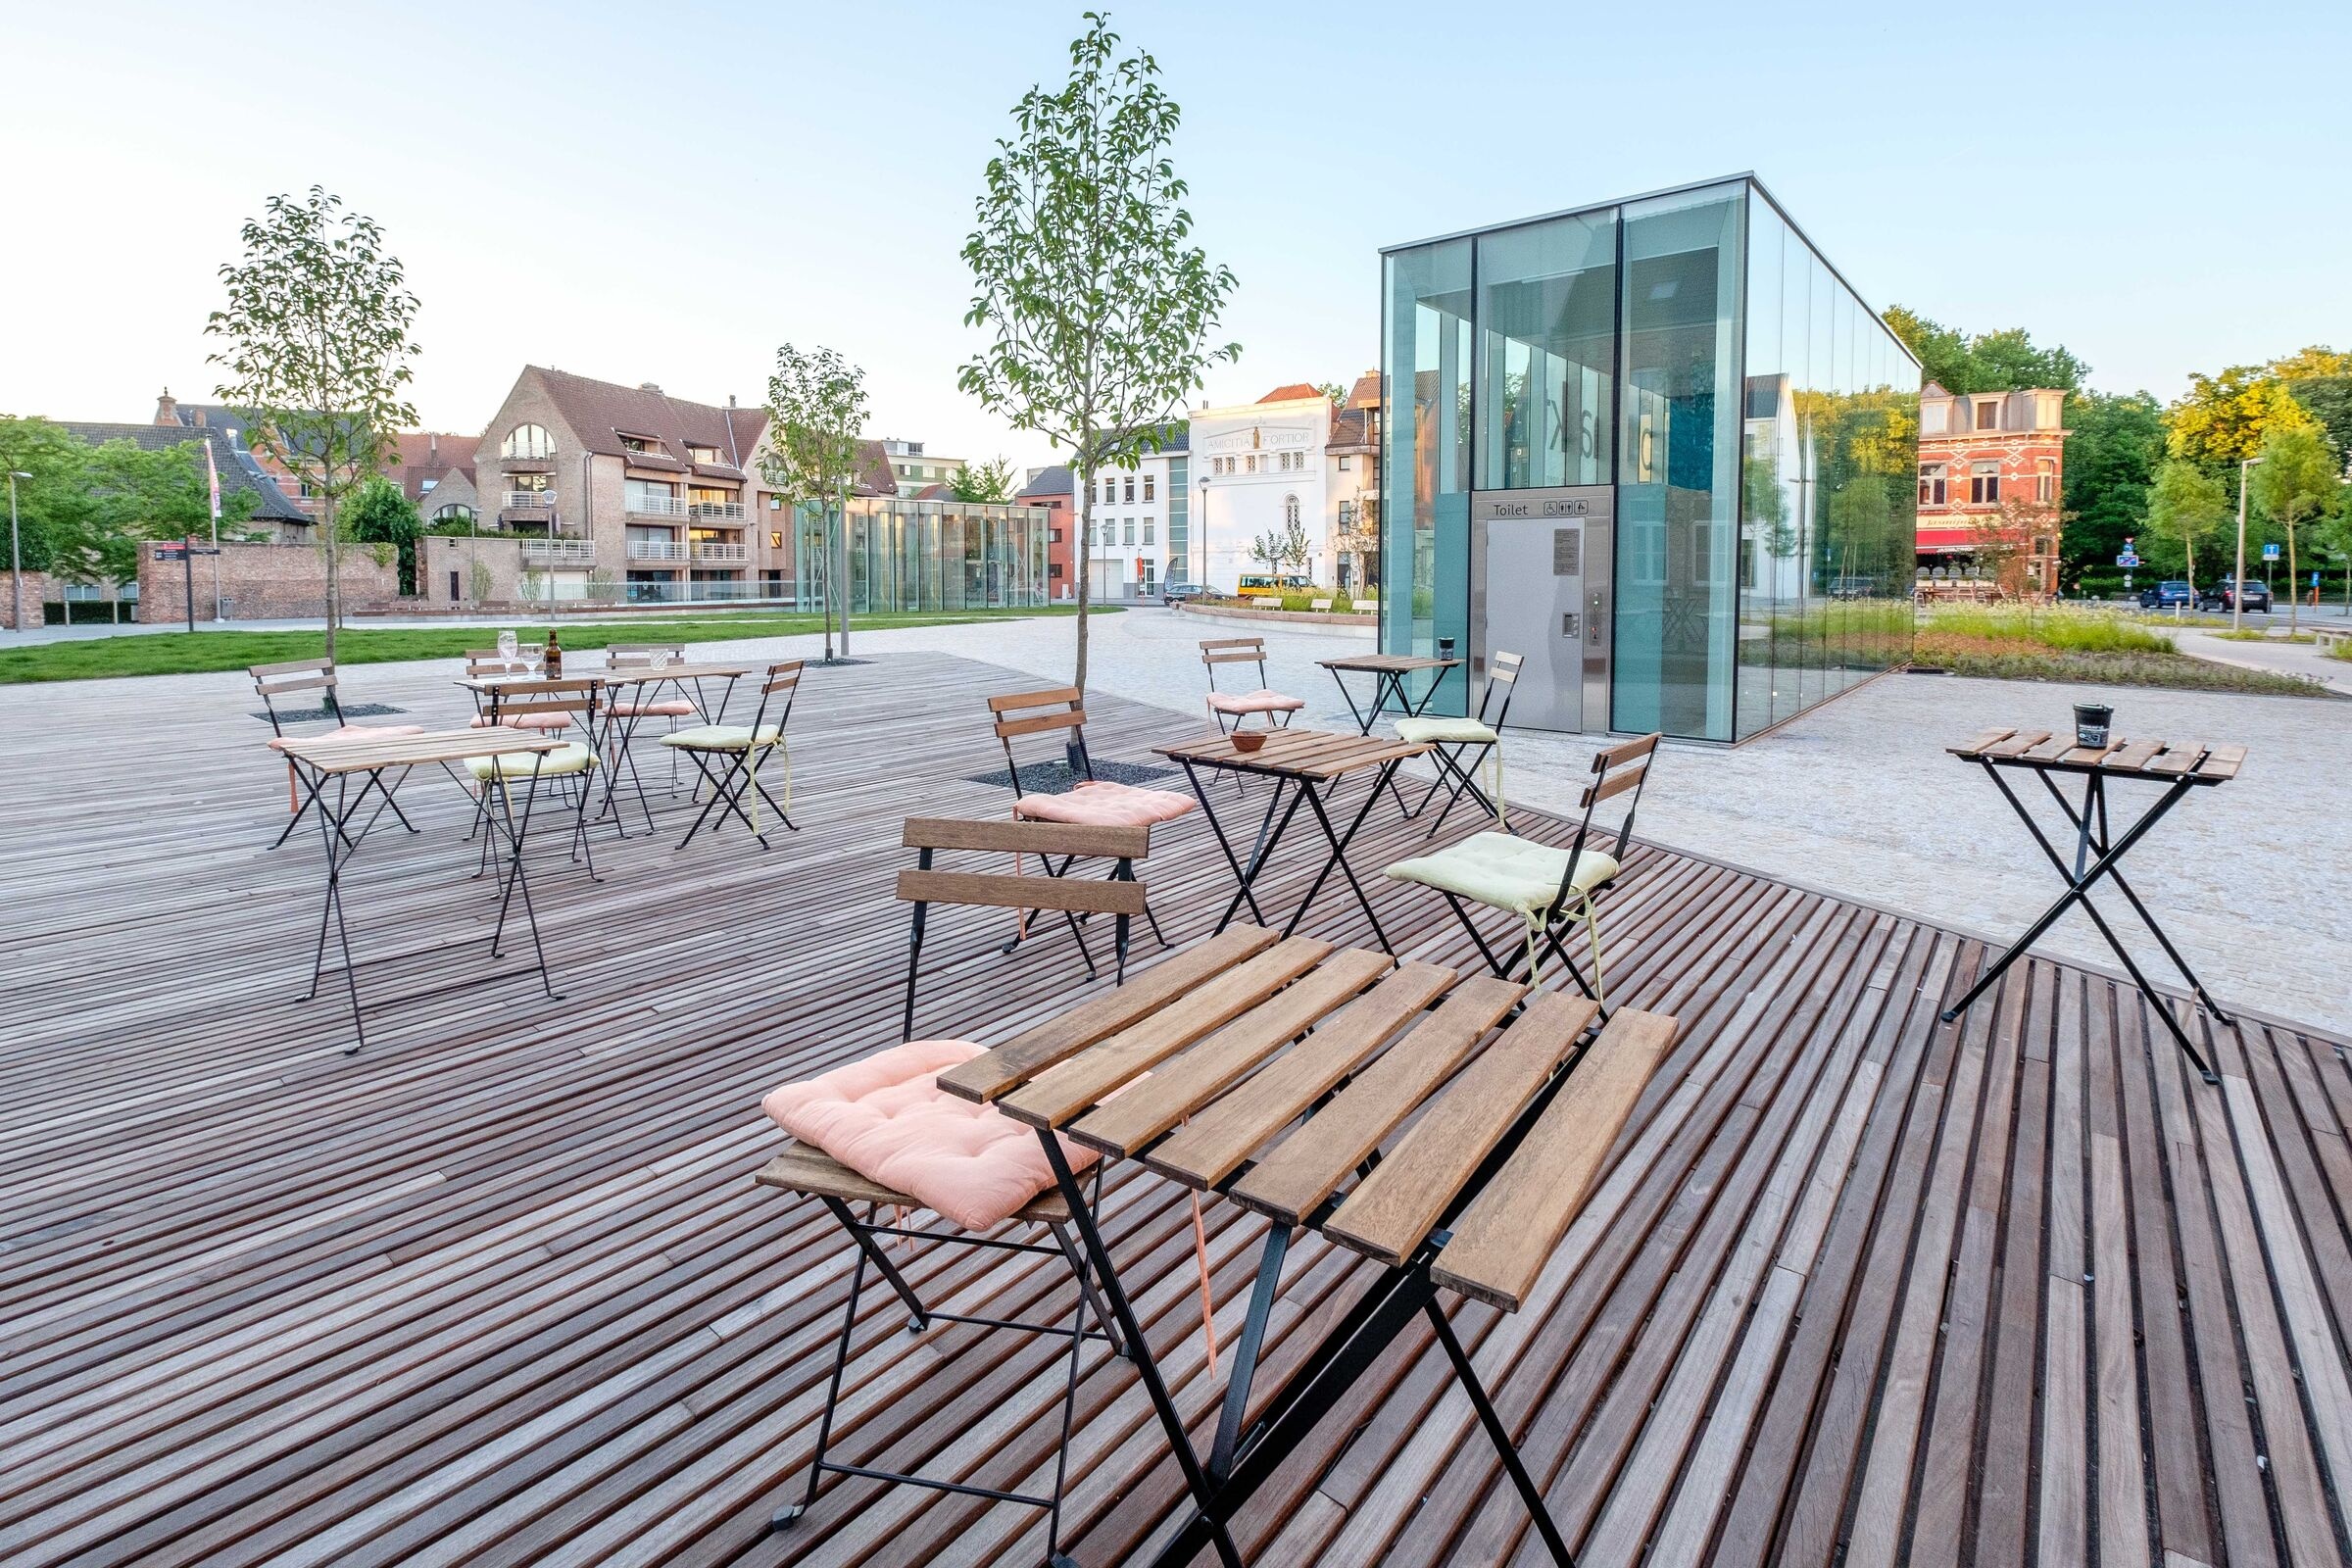 City Square: Houtmarkt city plaza in Kortrijk, Belgium, Common recreational area, Public cafe. 2400x1600 HD Wallpaper.